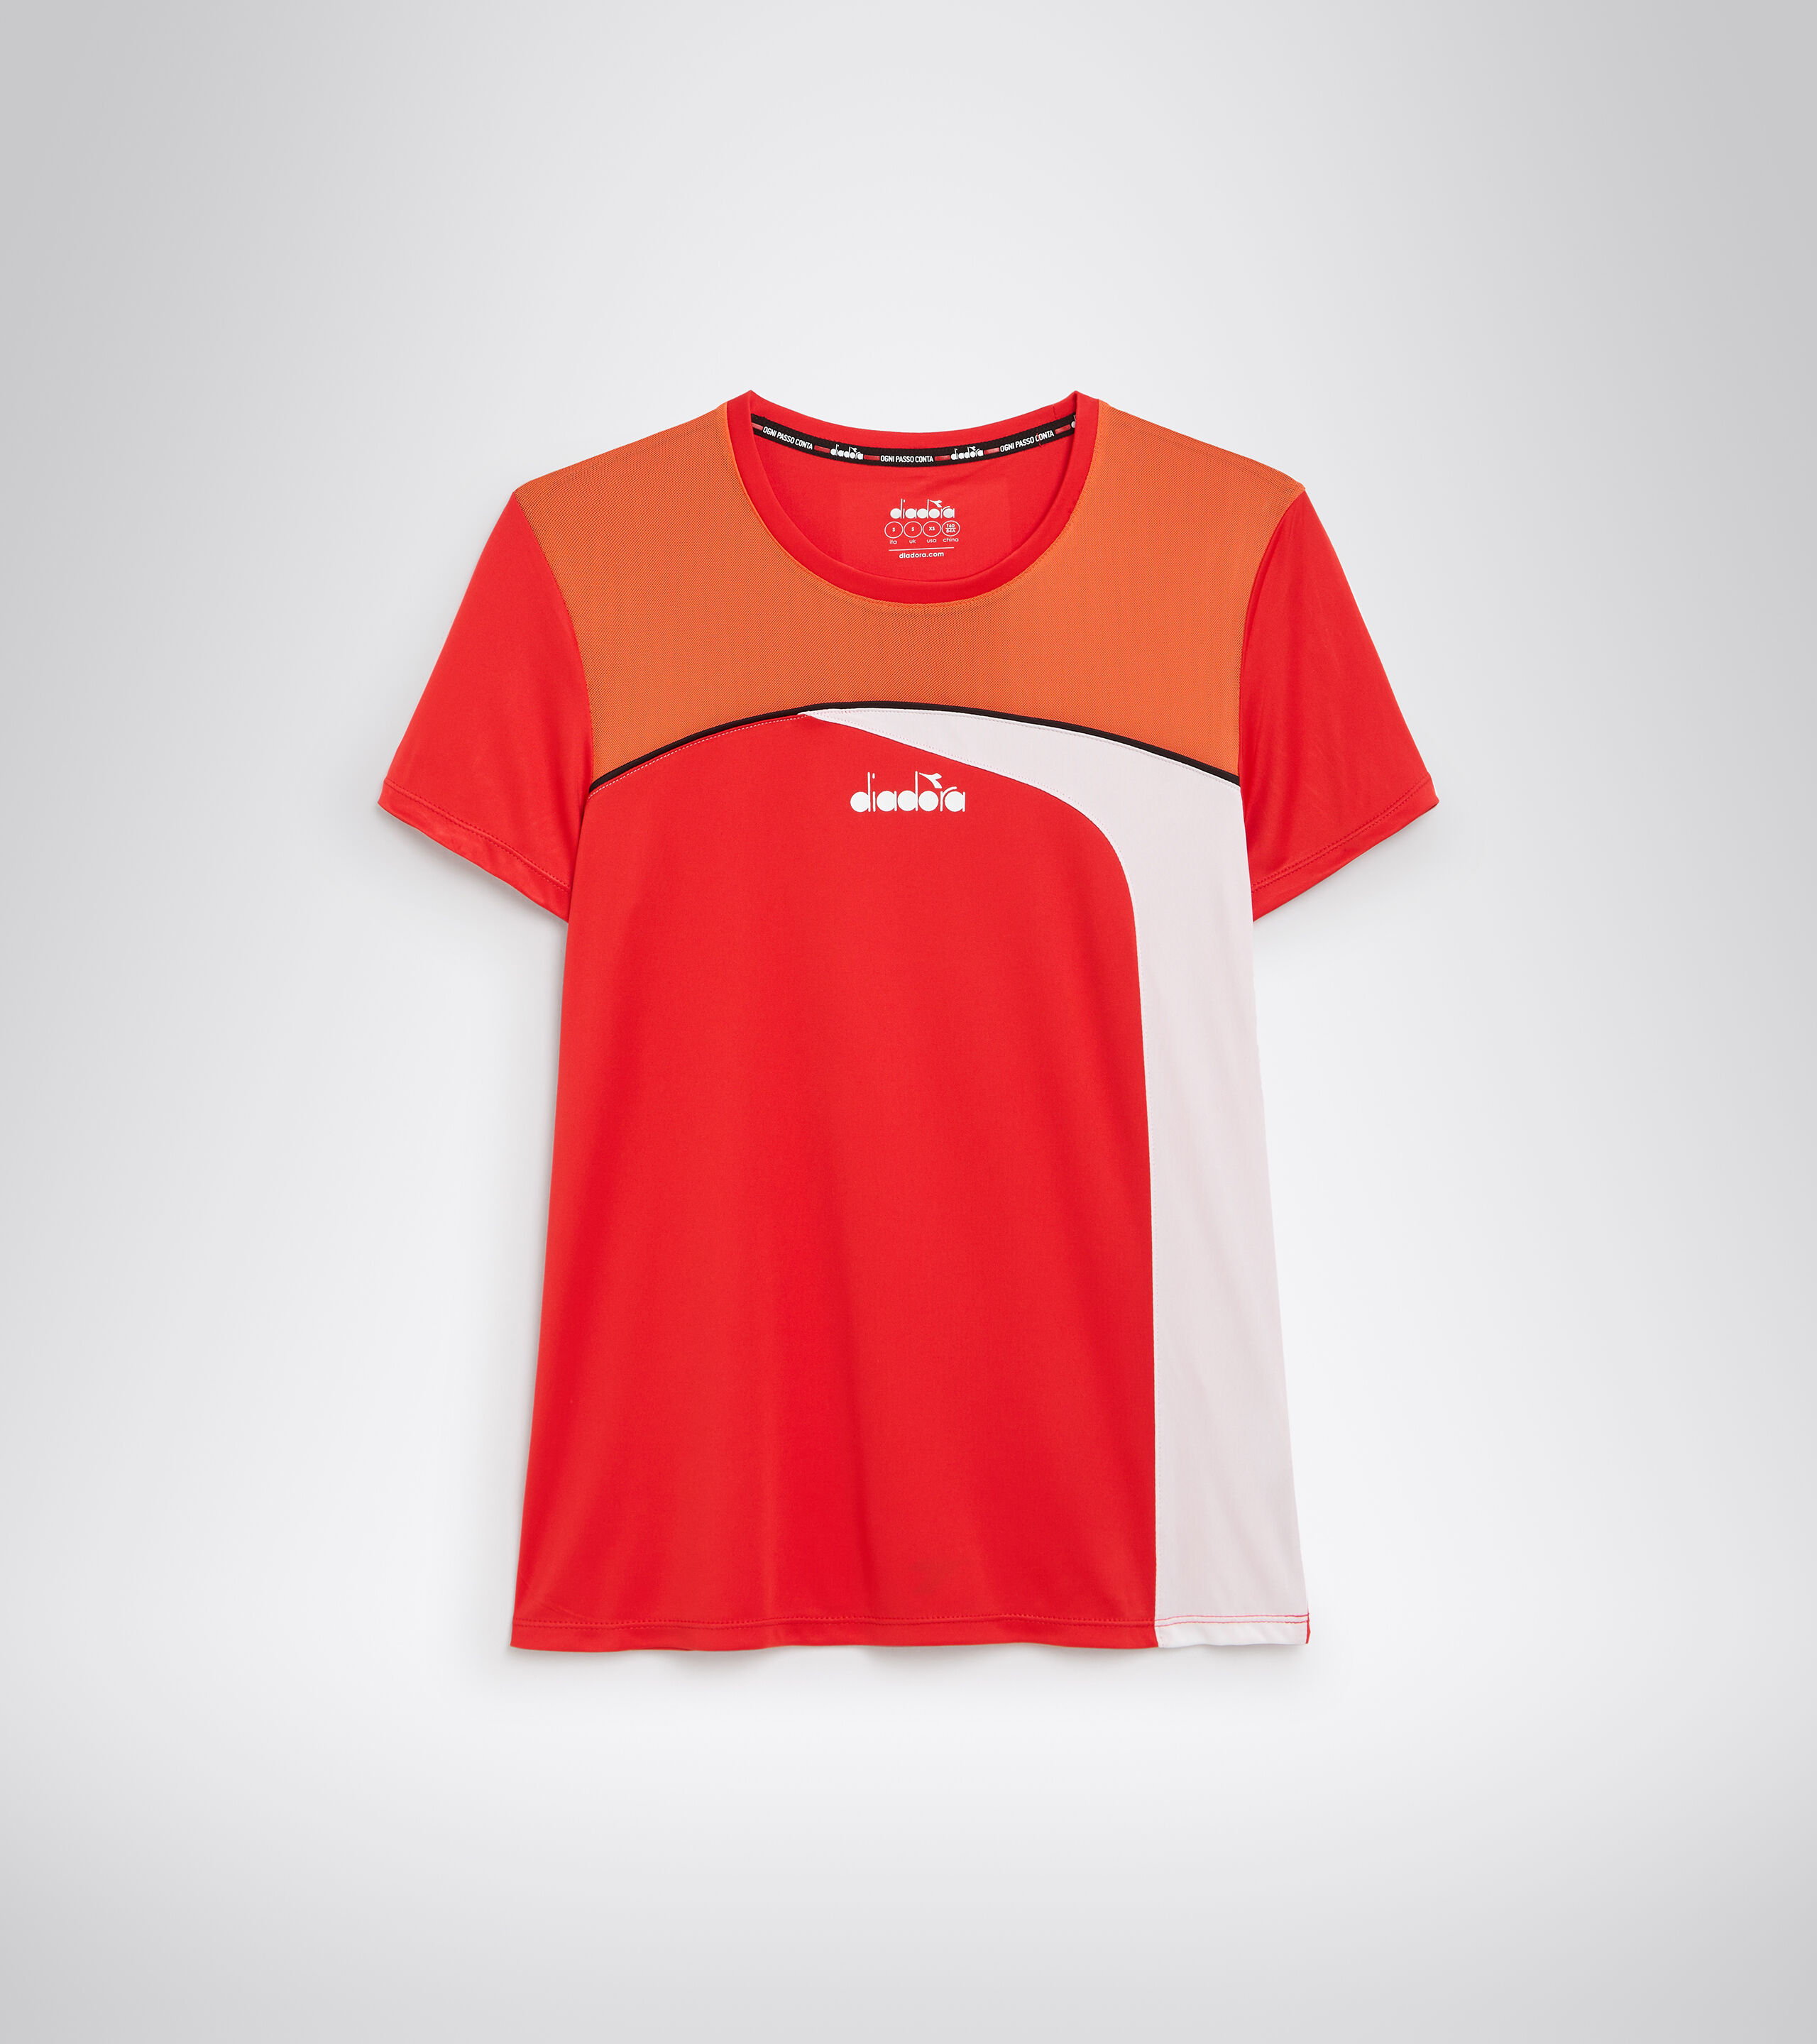 DIADORA L.TANK TOP Damen Lauf Shirt Trainings Shirt Fitness Shirt 102.170998 